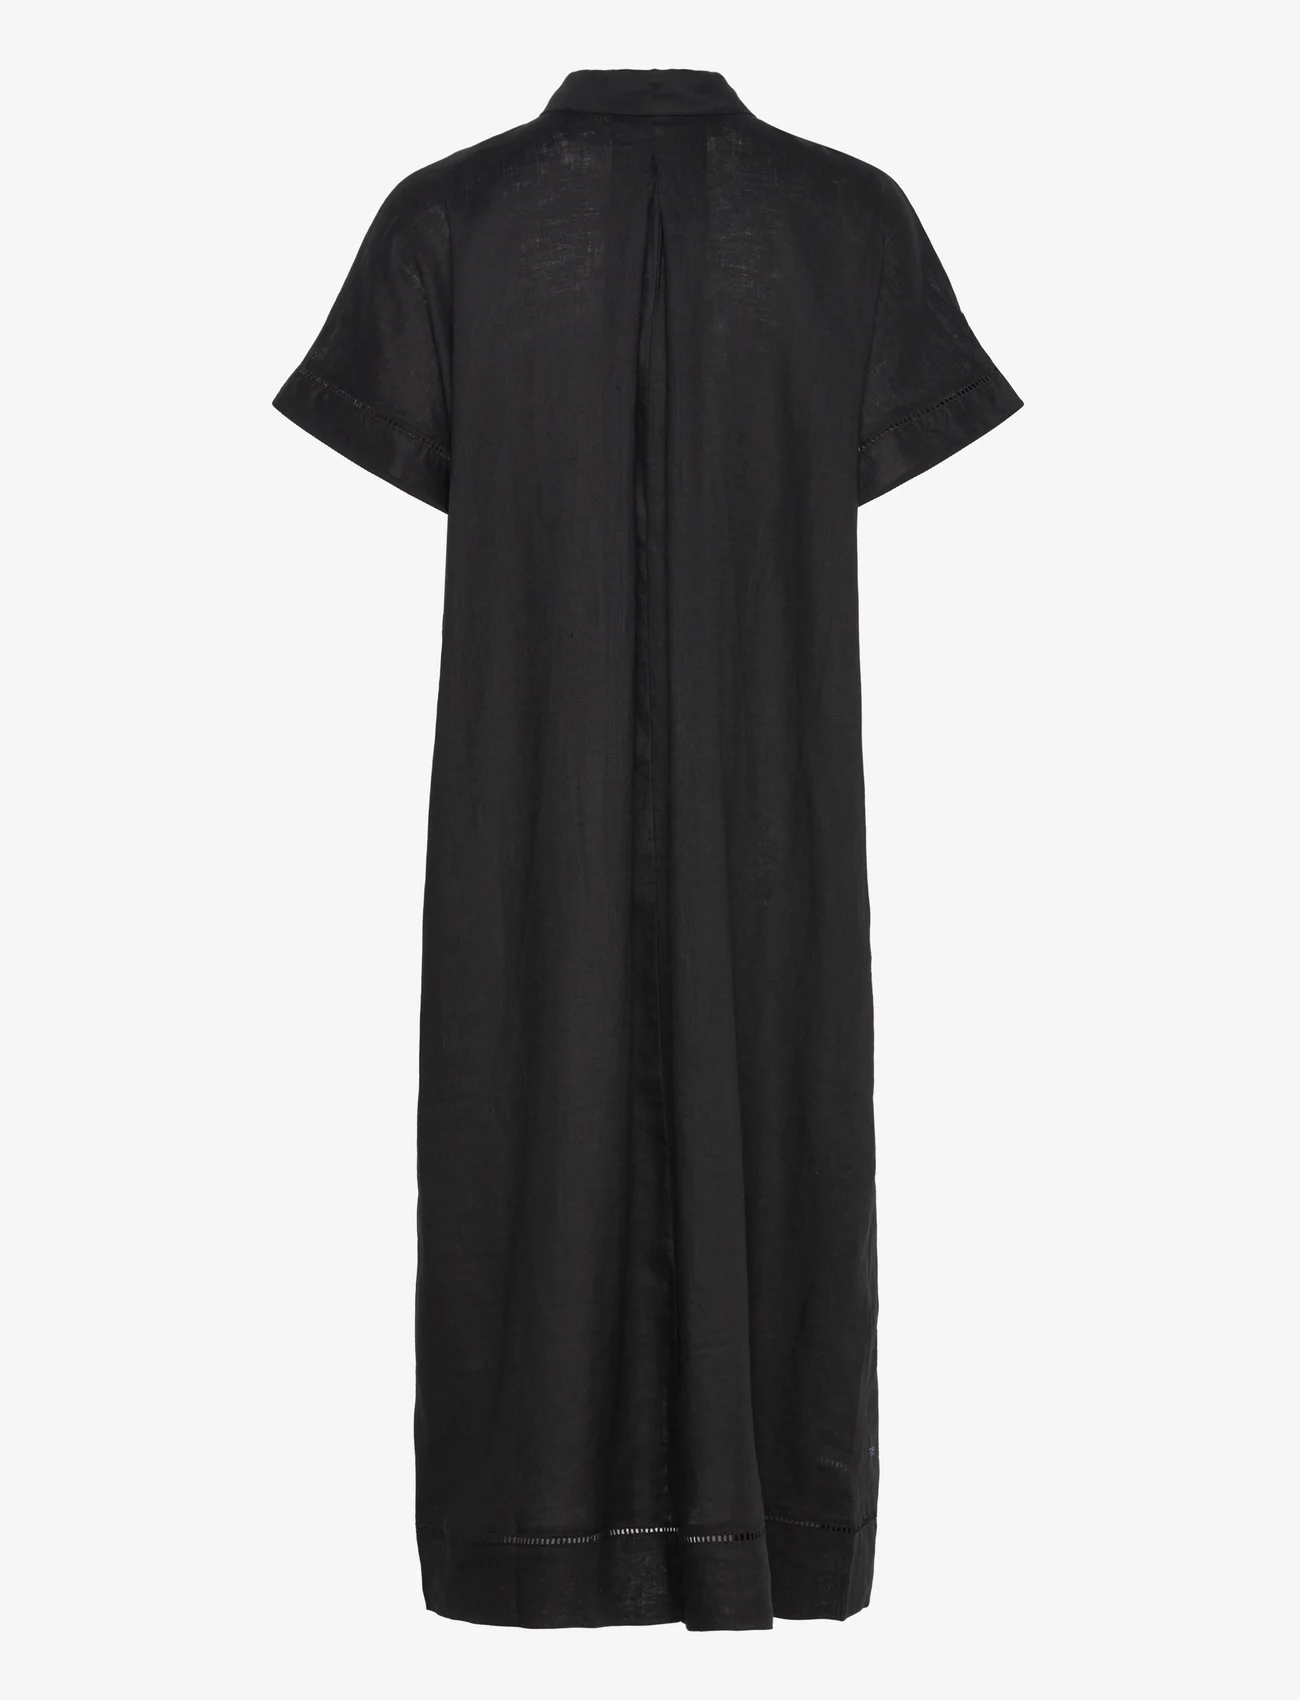 Lindex - Dress Laila pure linen - hemdkleider - black - 1